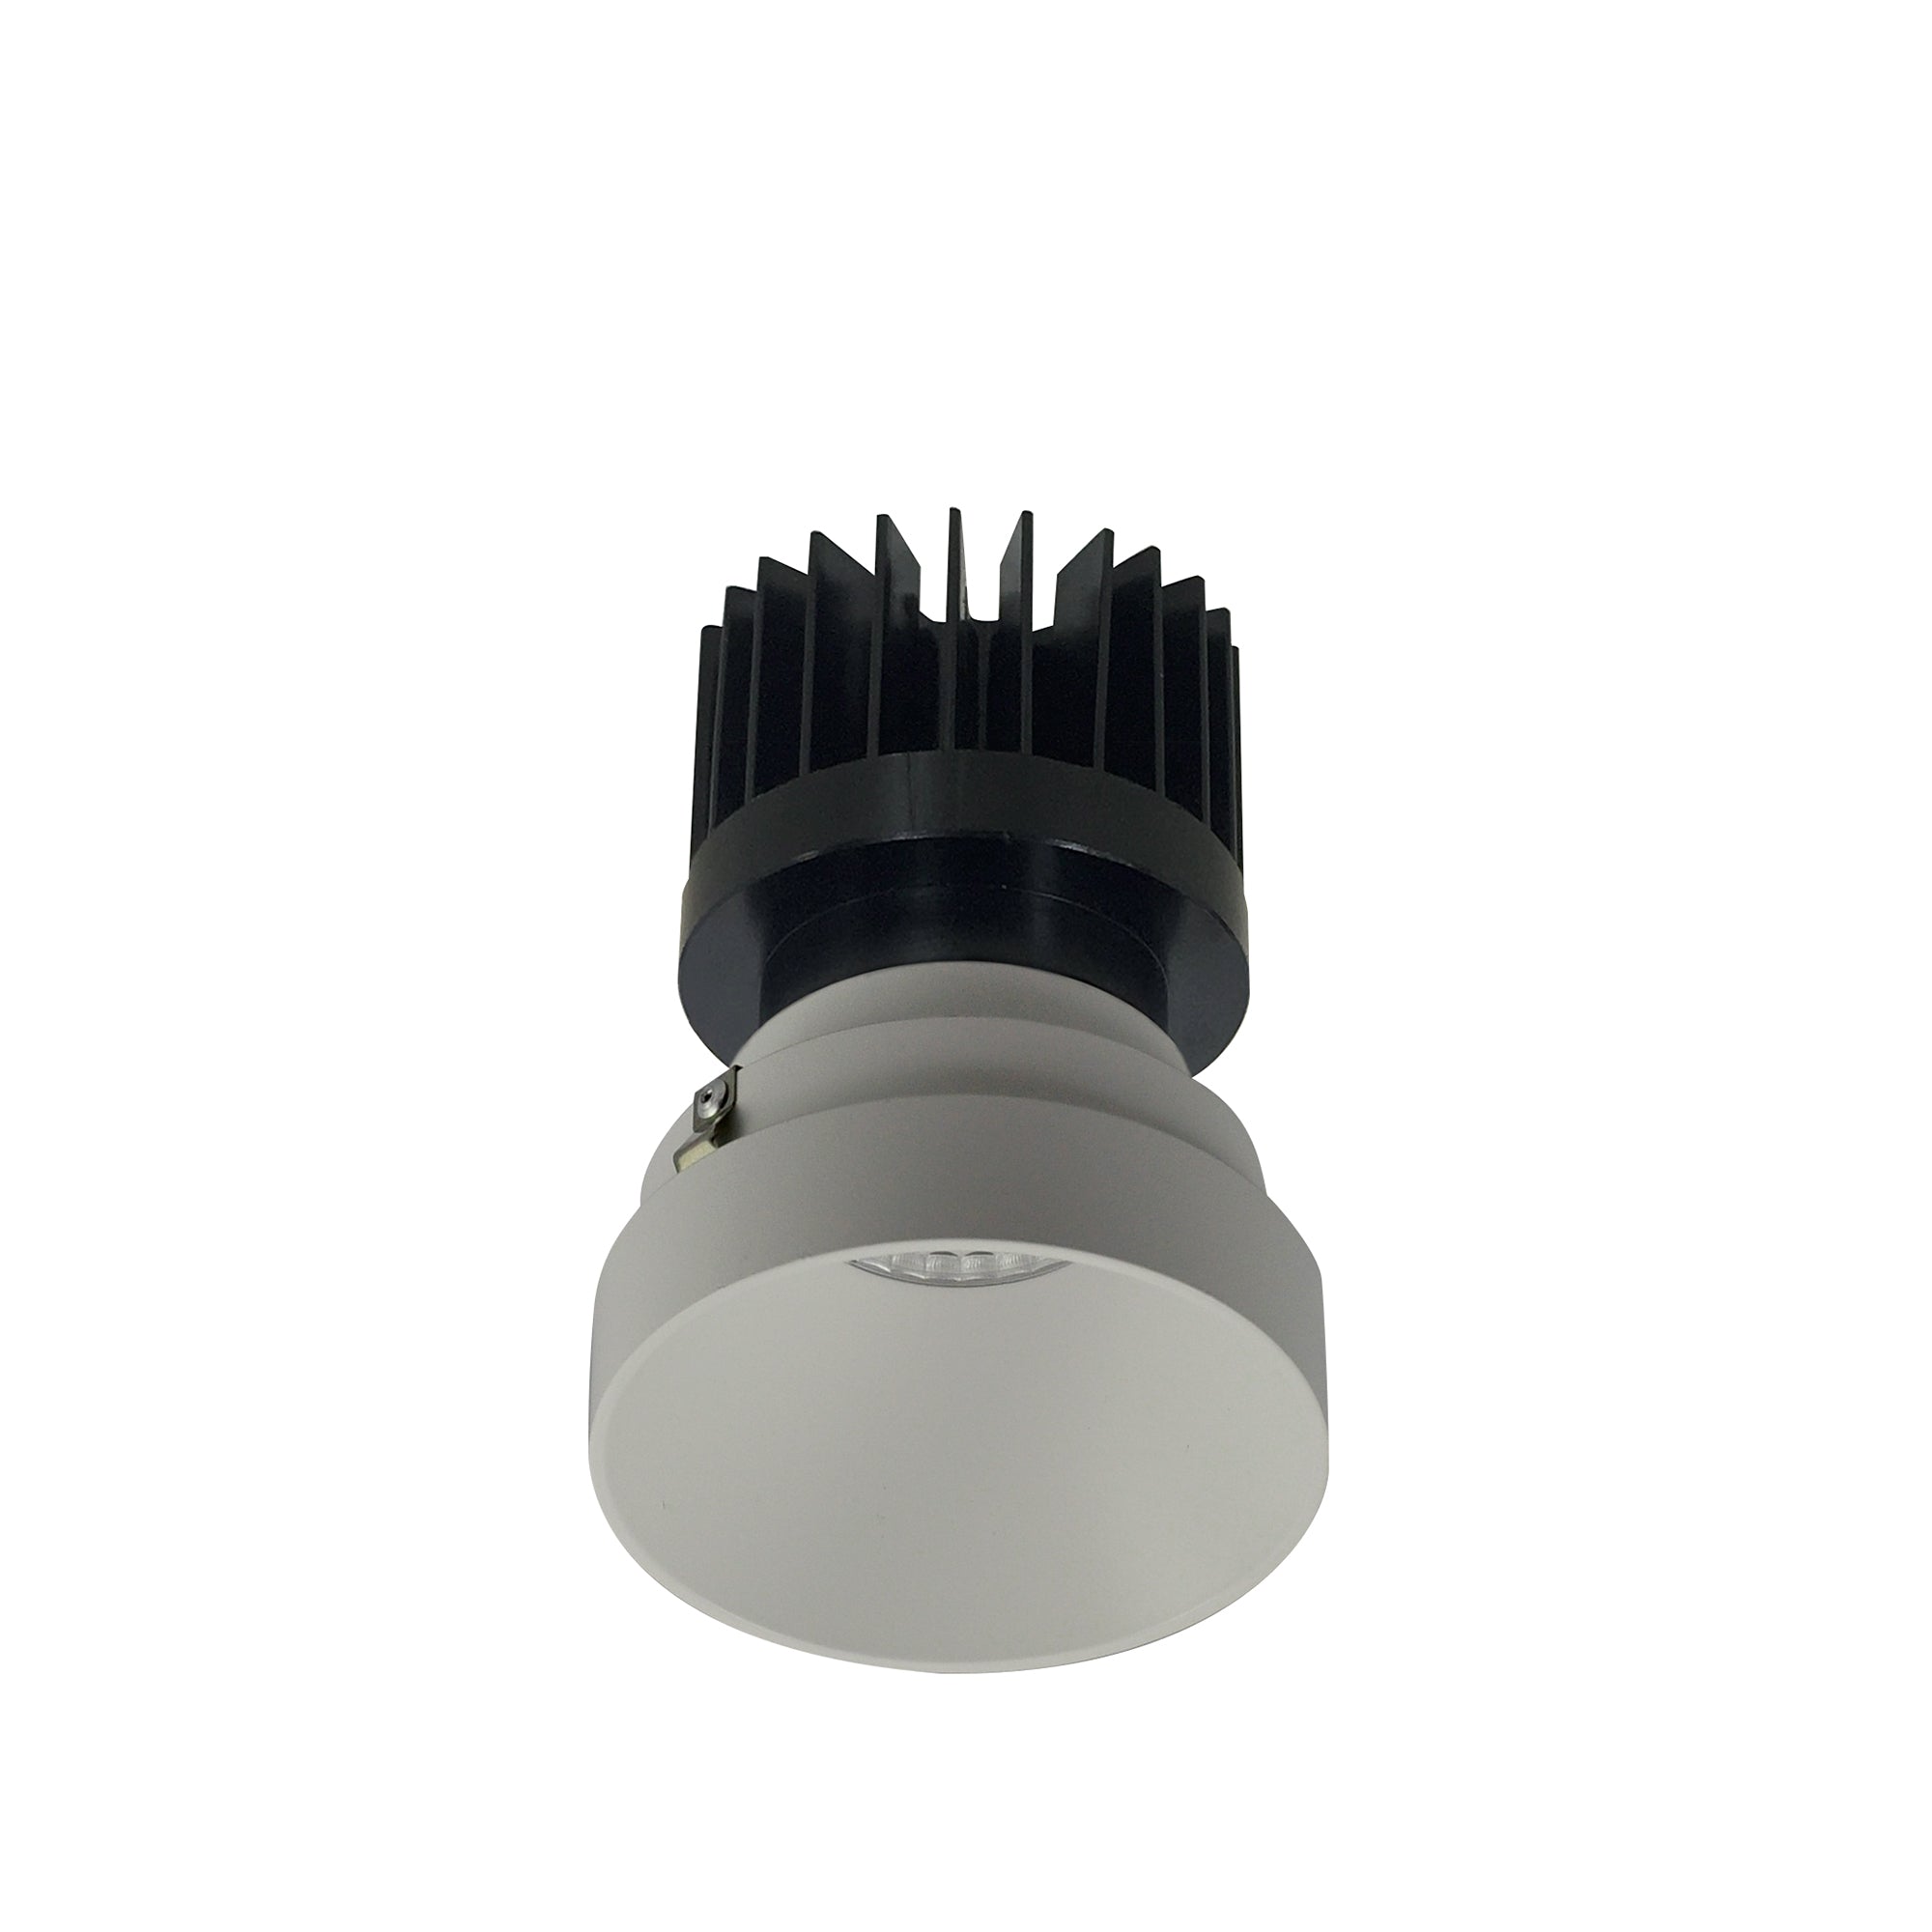 Nora Lighting NIO-4RTLNDC40QWW 4" Iolite LED Round Trimless Downlight, 10-Degree Optic, 800lm / 12W, 4000K - White